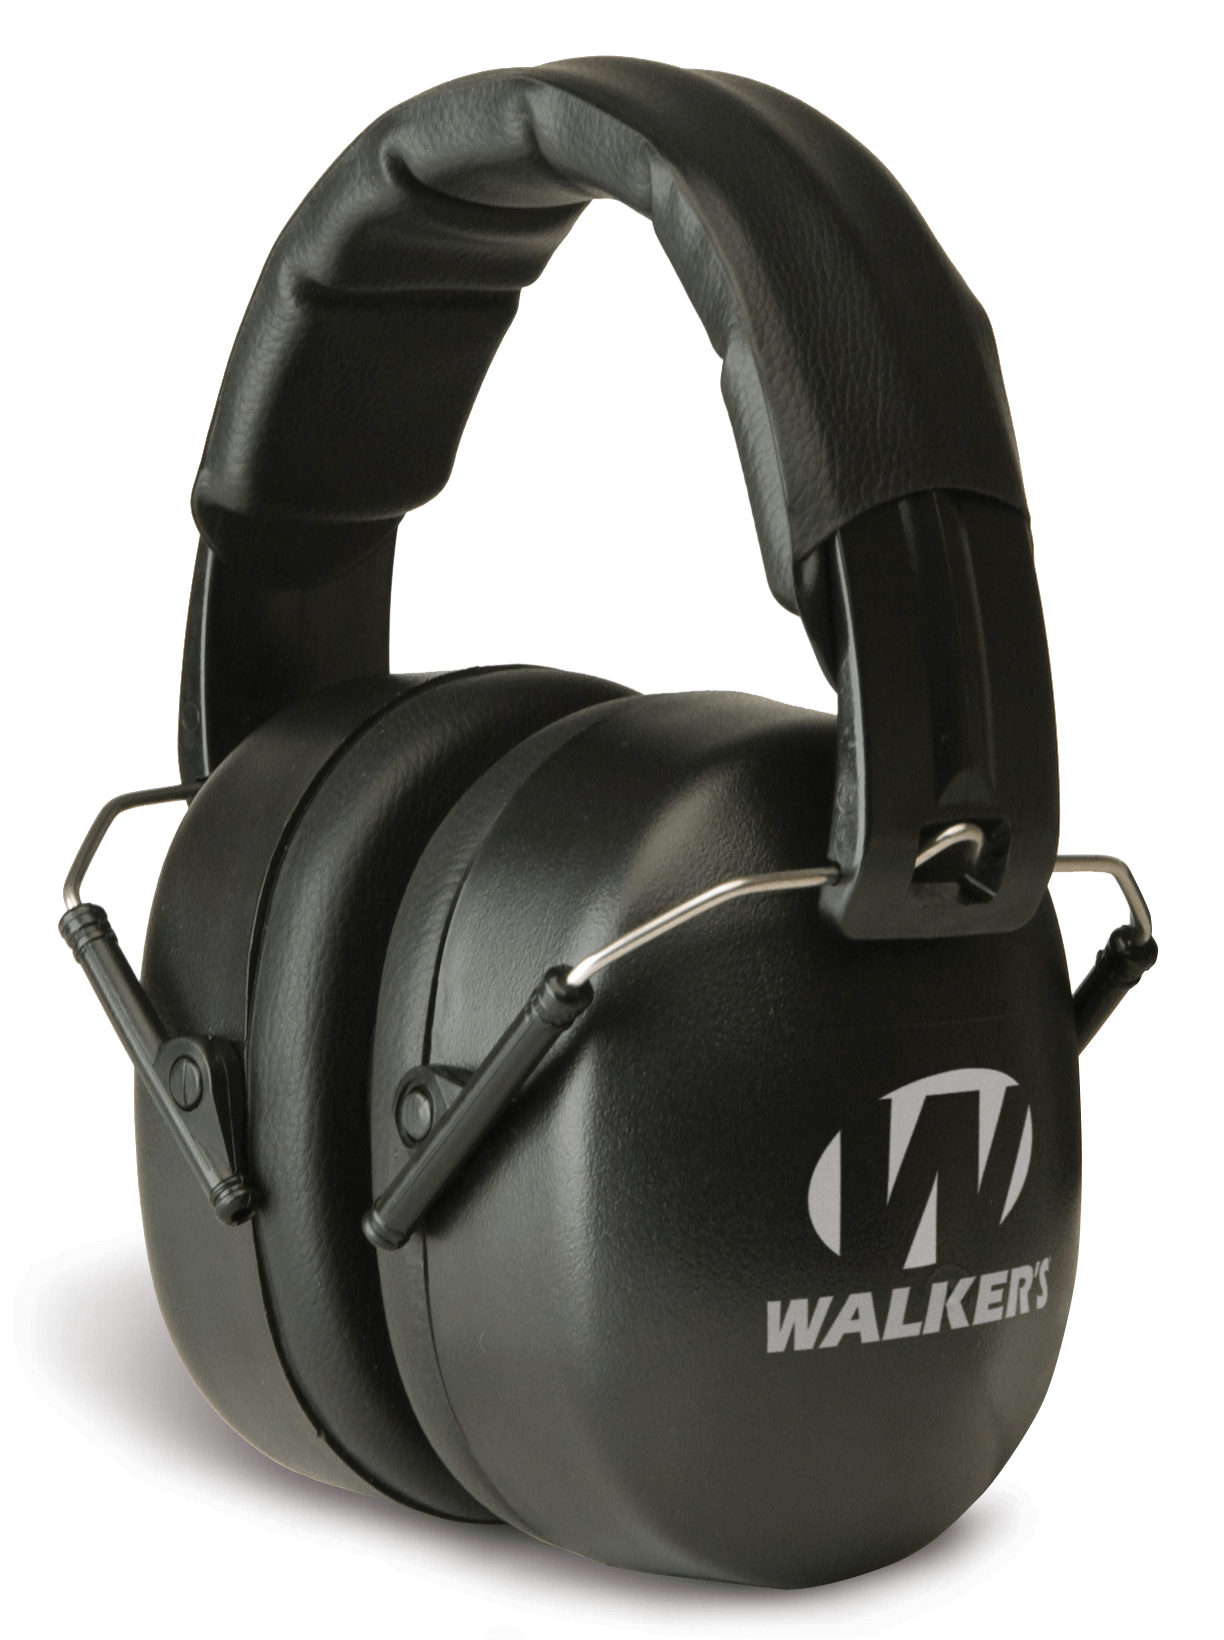 Walkers Game Ear Walkers Game Ear Ext Range, Wlkr Gwp-exfm3      Ext Fold Range Muff Shooting